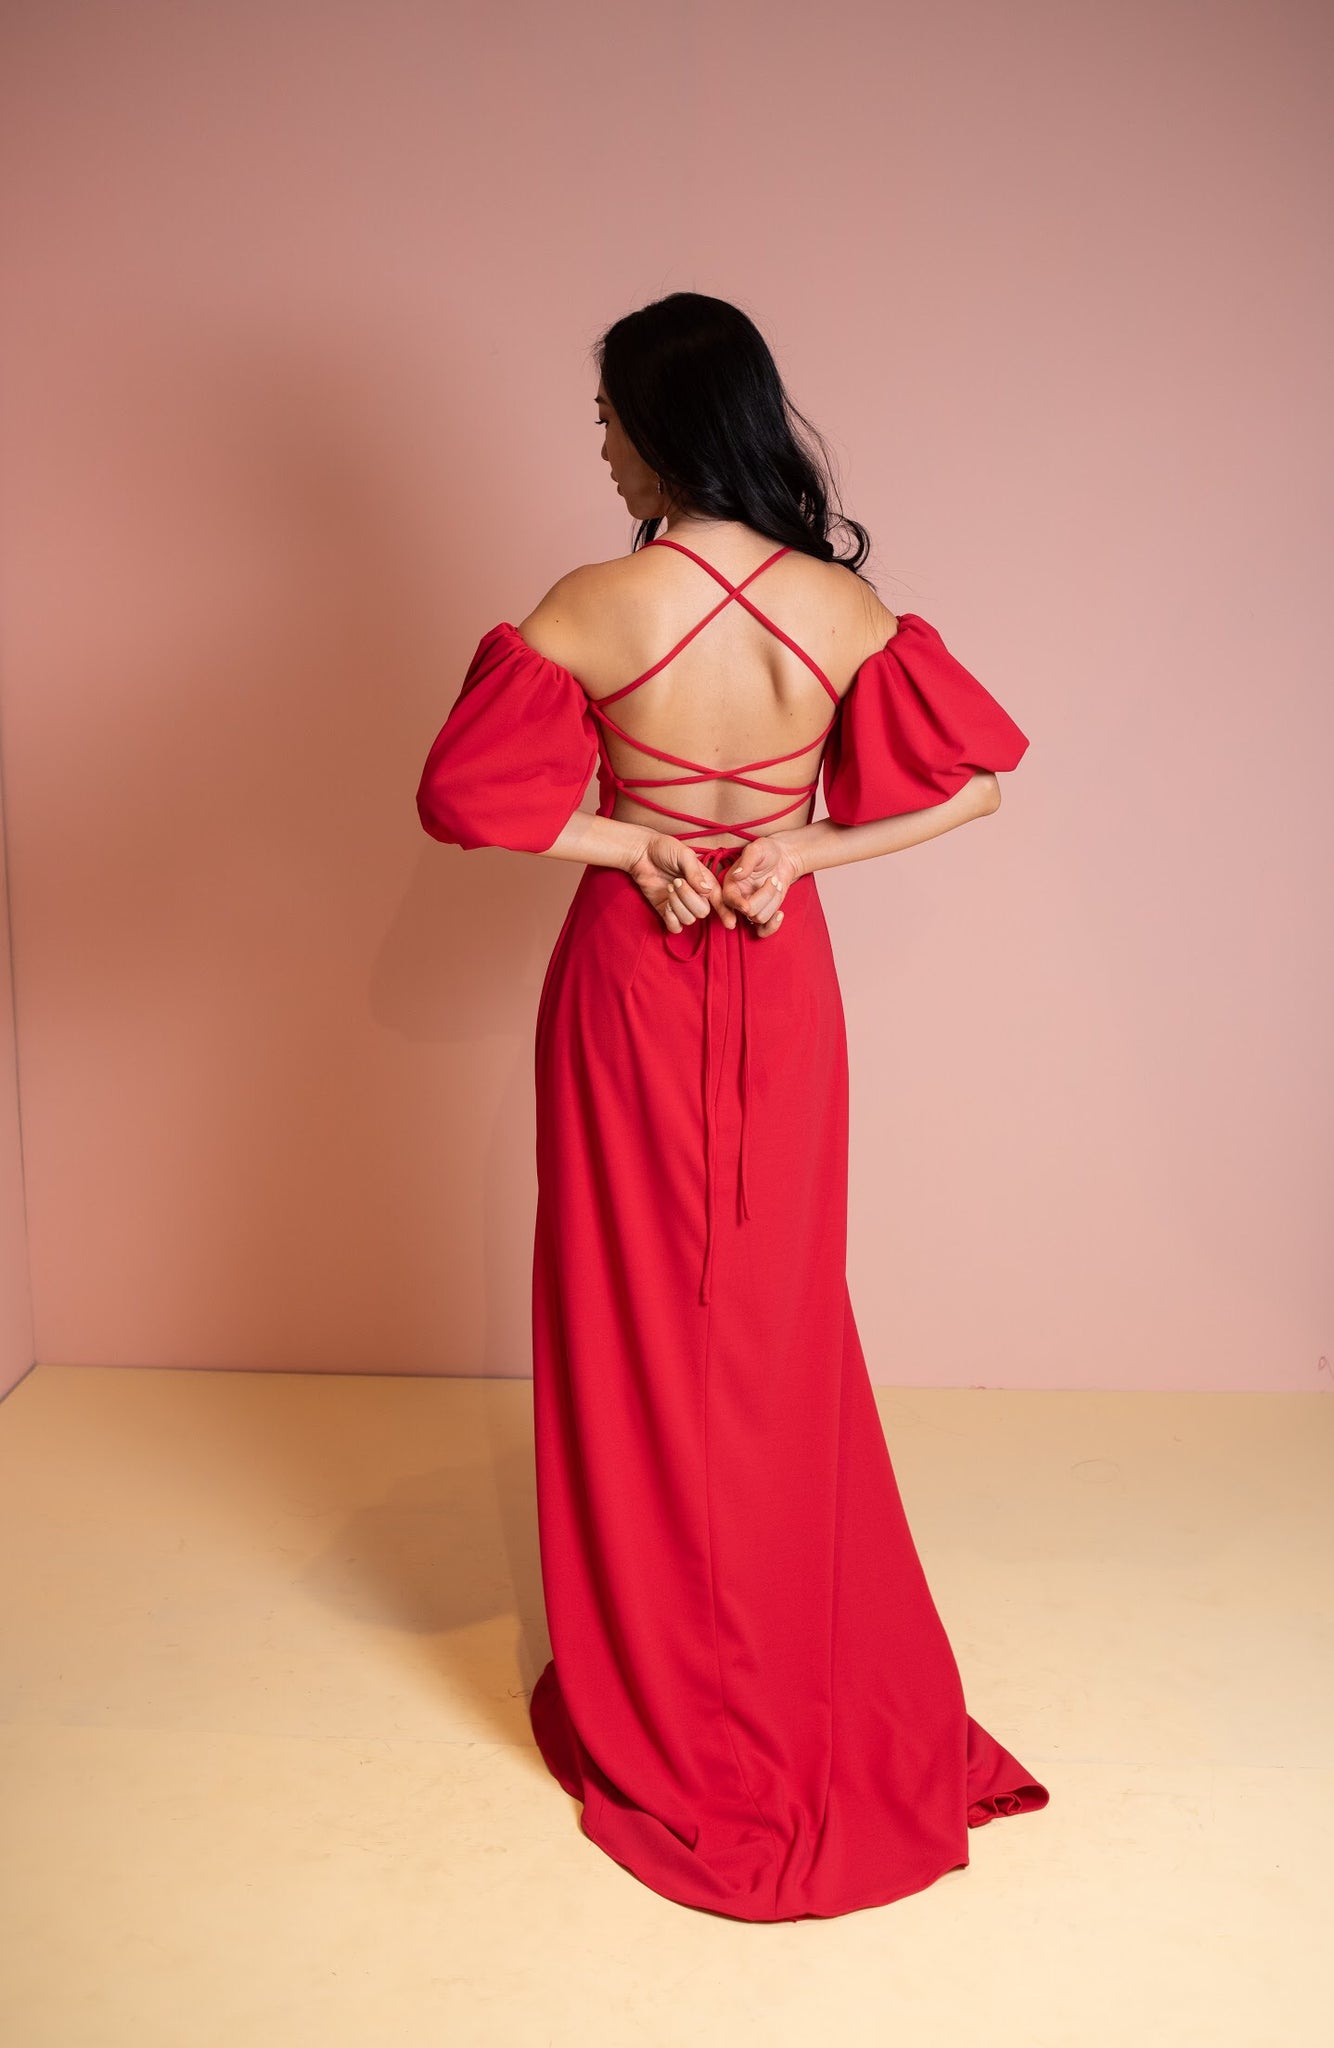 Backless with off shoulder red dress